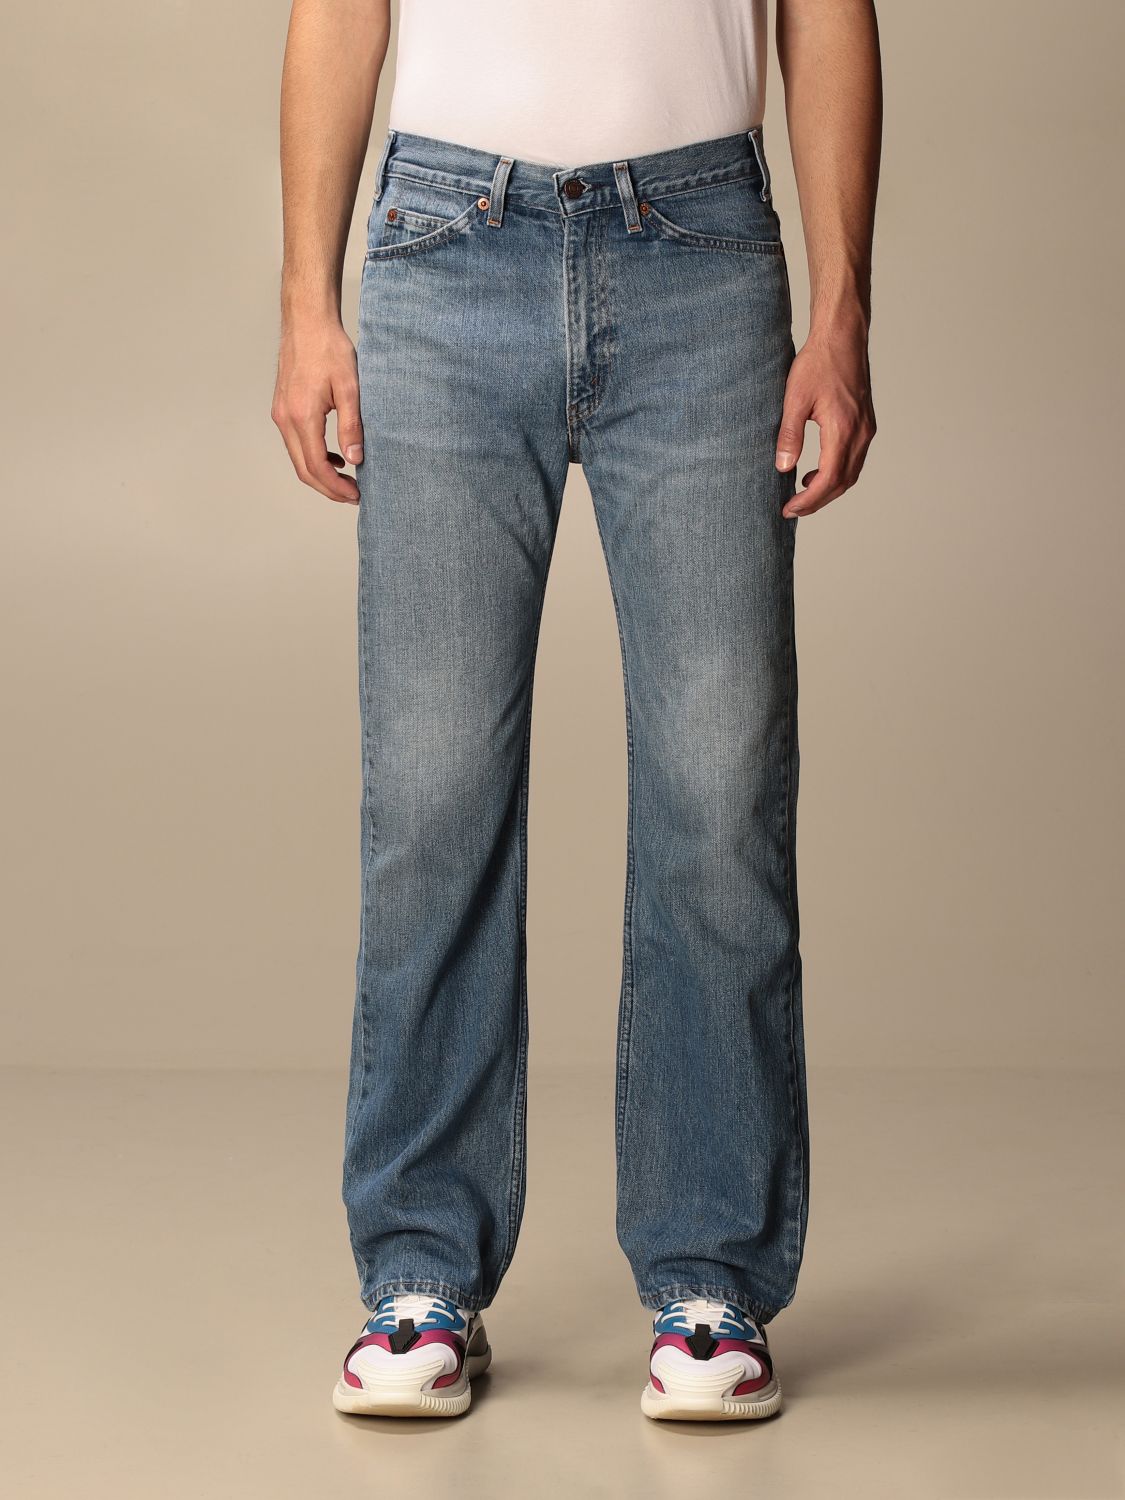 resident stærk lugt VALENTINO: Levi's x 1969 re-edition jeans | Jeans Valentino Men Denim | Jeans  Valentino VV0DD01G 7FJ GIGLIO.COM